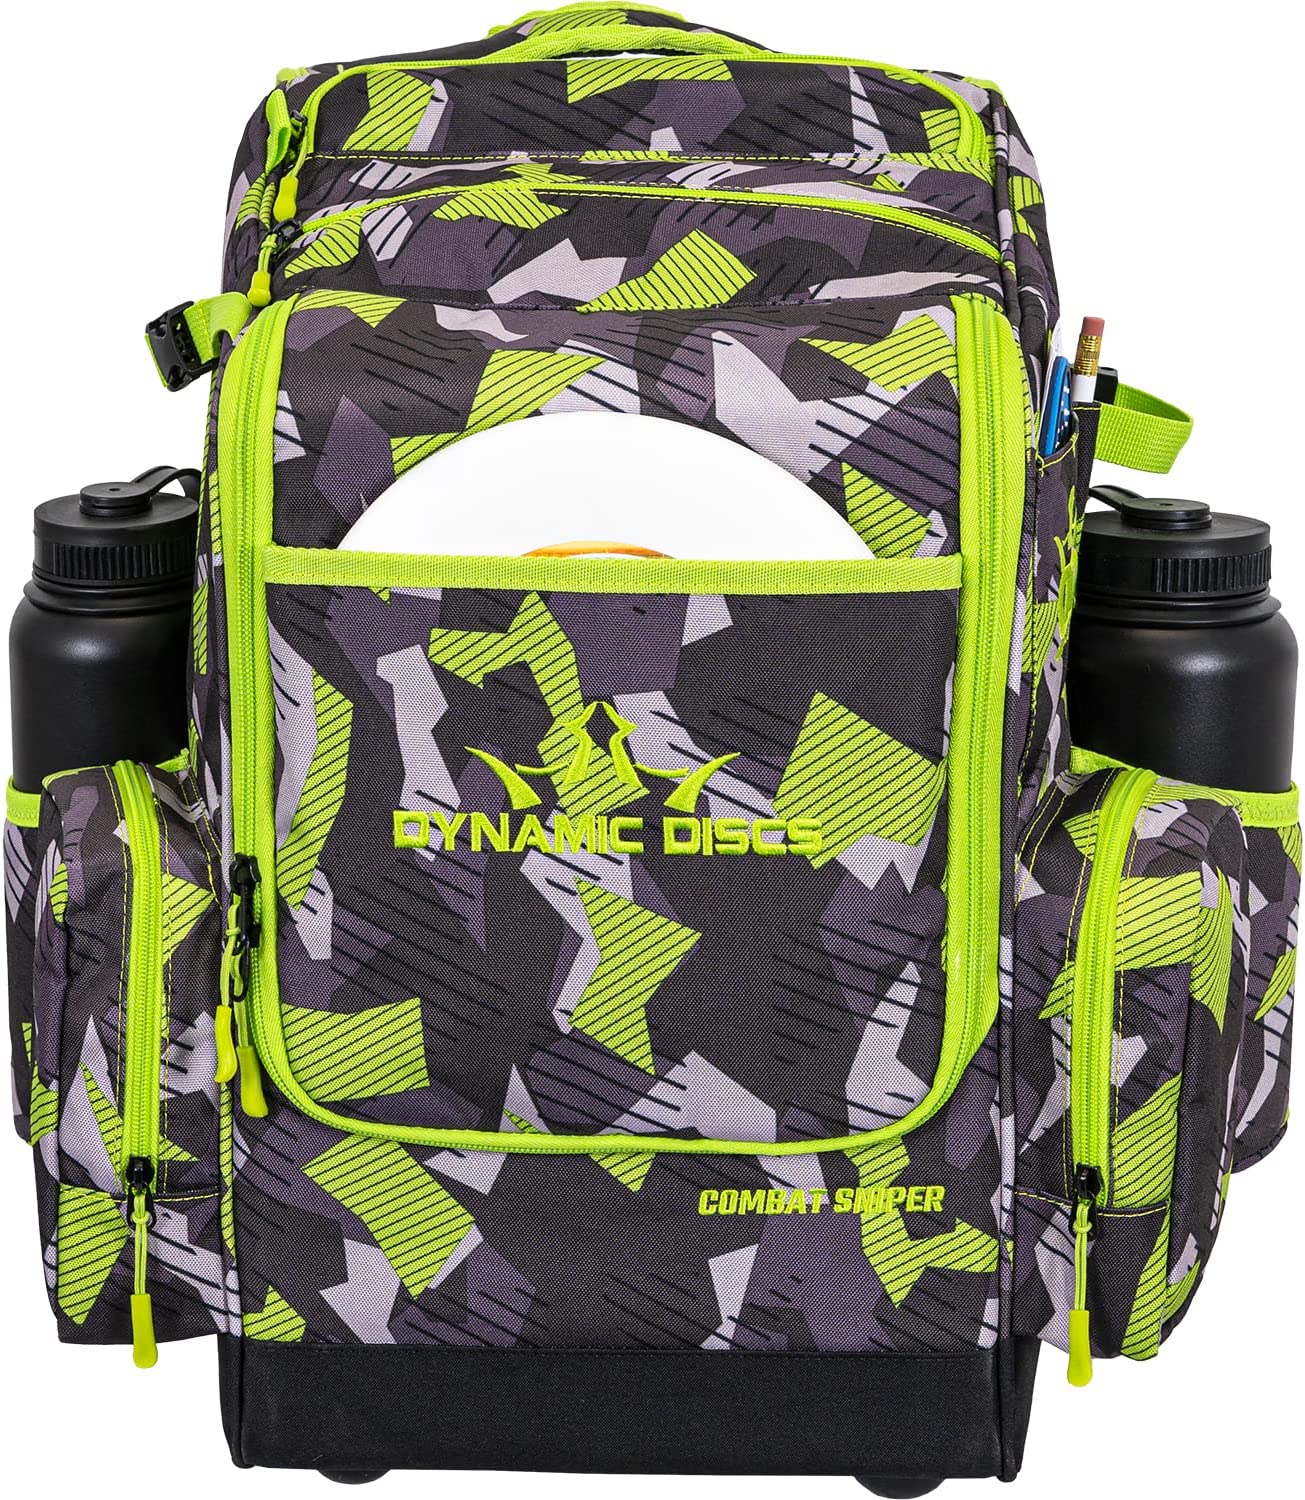 Dynamic Discs Combat Sniper Backpack Disc Golf Bag - Electric Camo